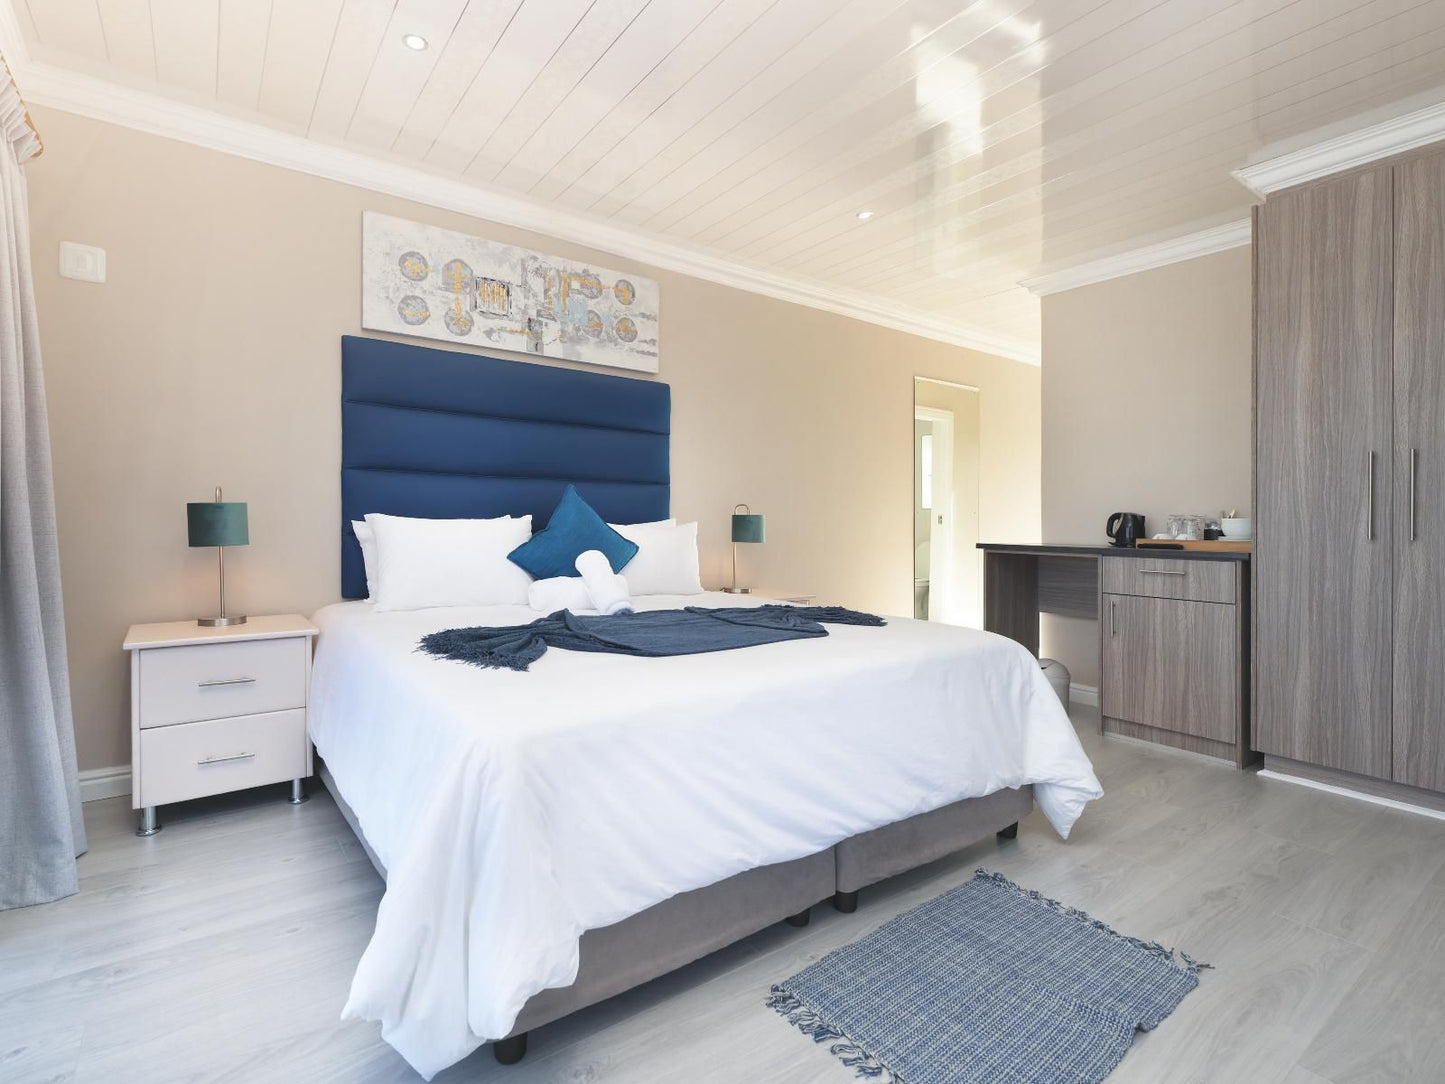 King Guest Lodge Bluewater Bay Port Elizabeth Eastern Cape South Africa Bedroom